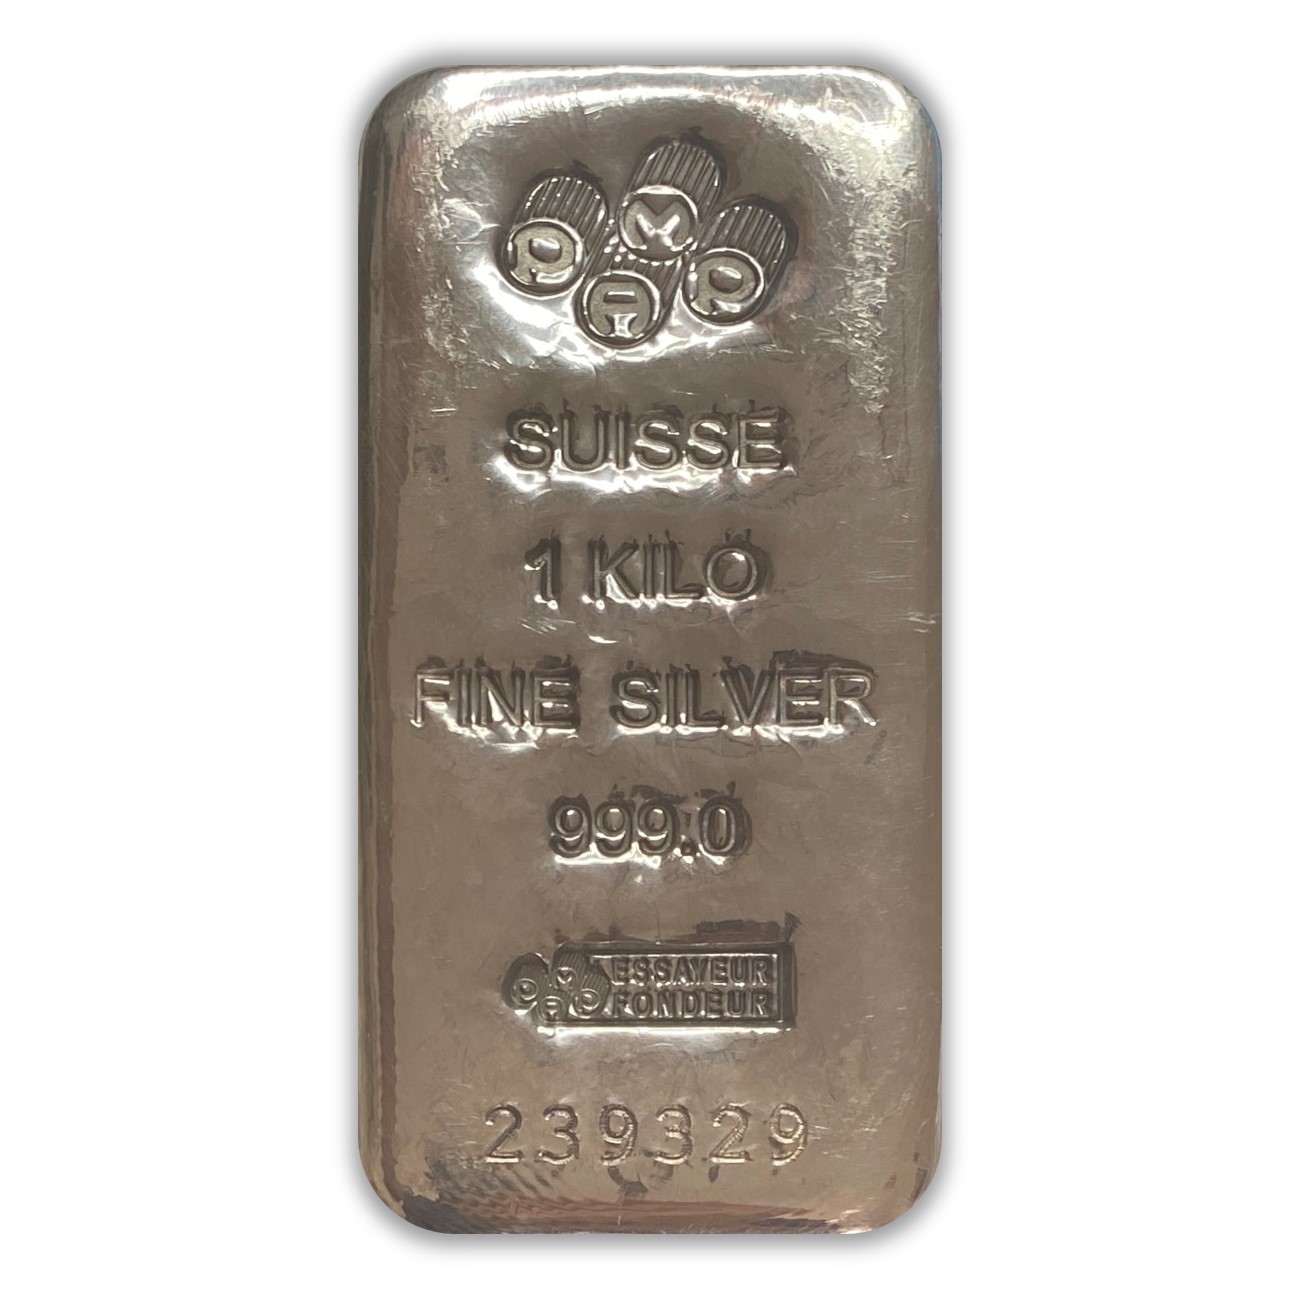 PAMP 1 kg Silver Bar Mirrored - 239329